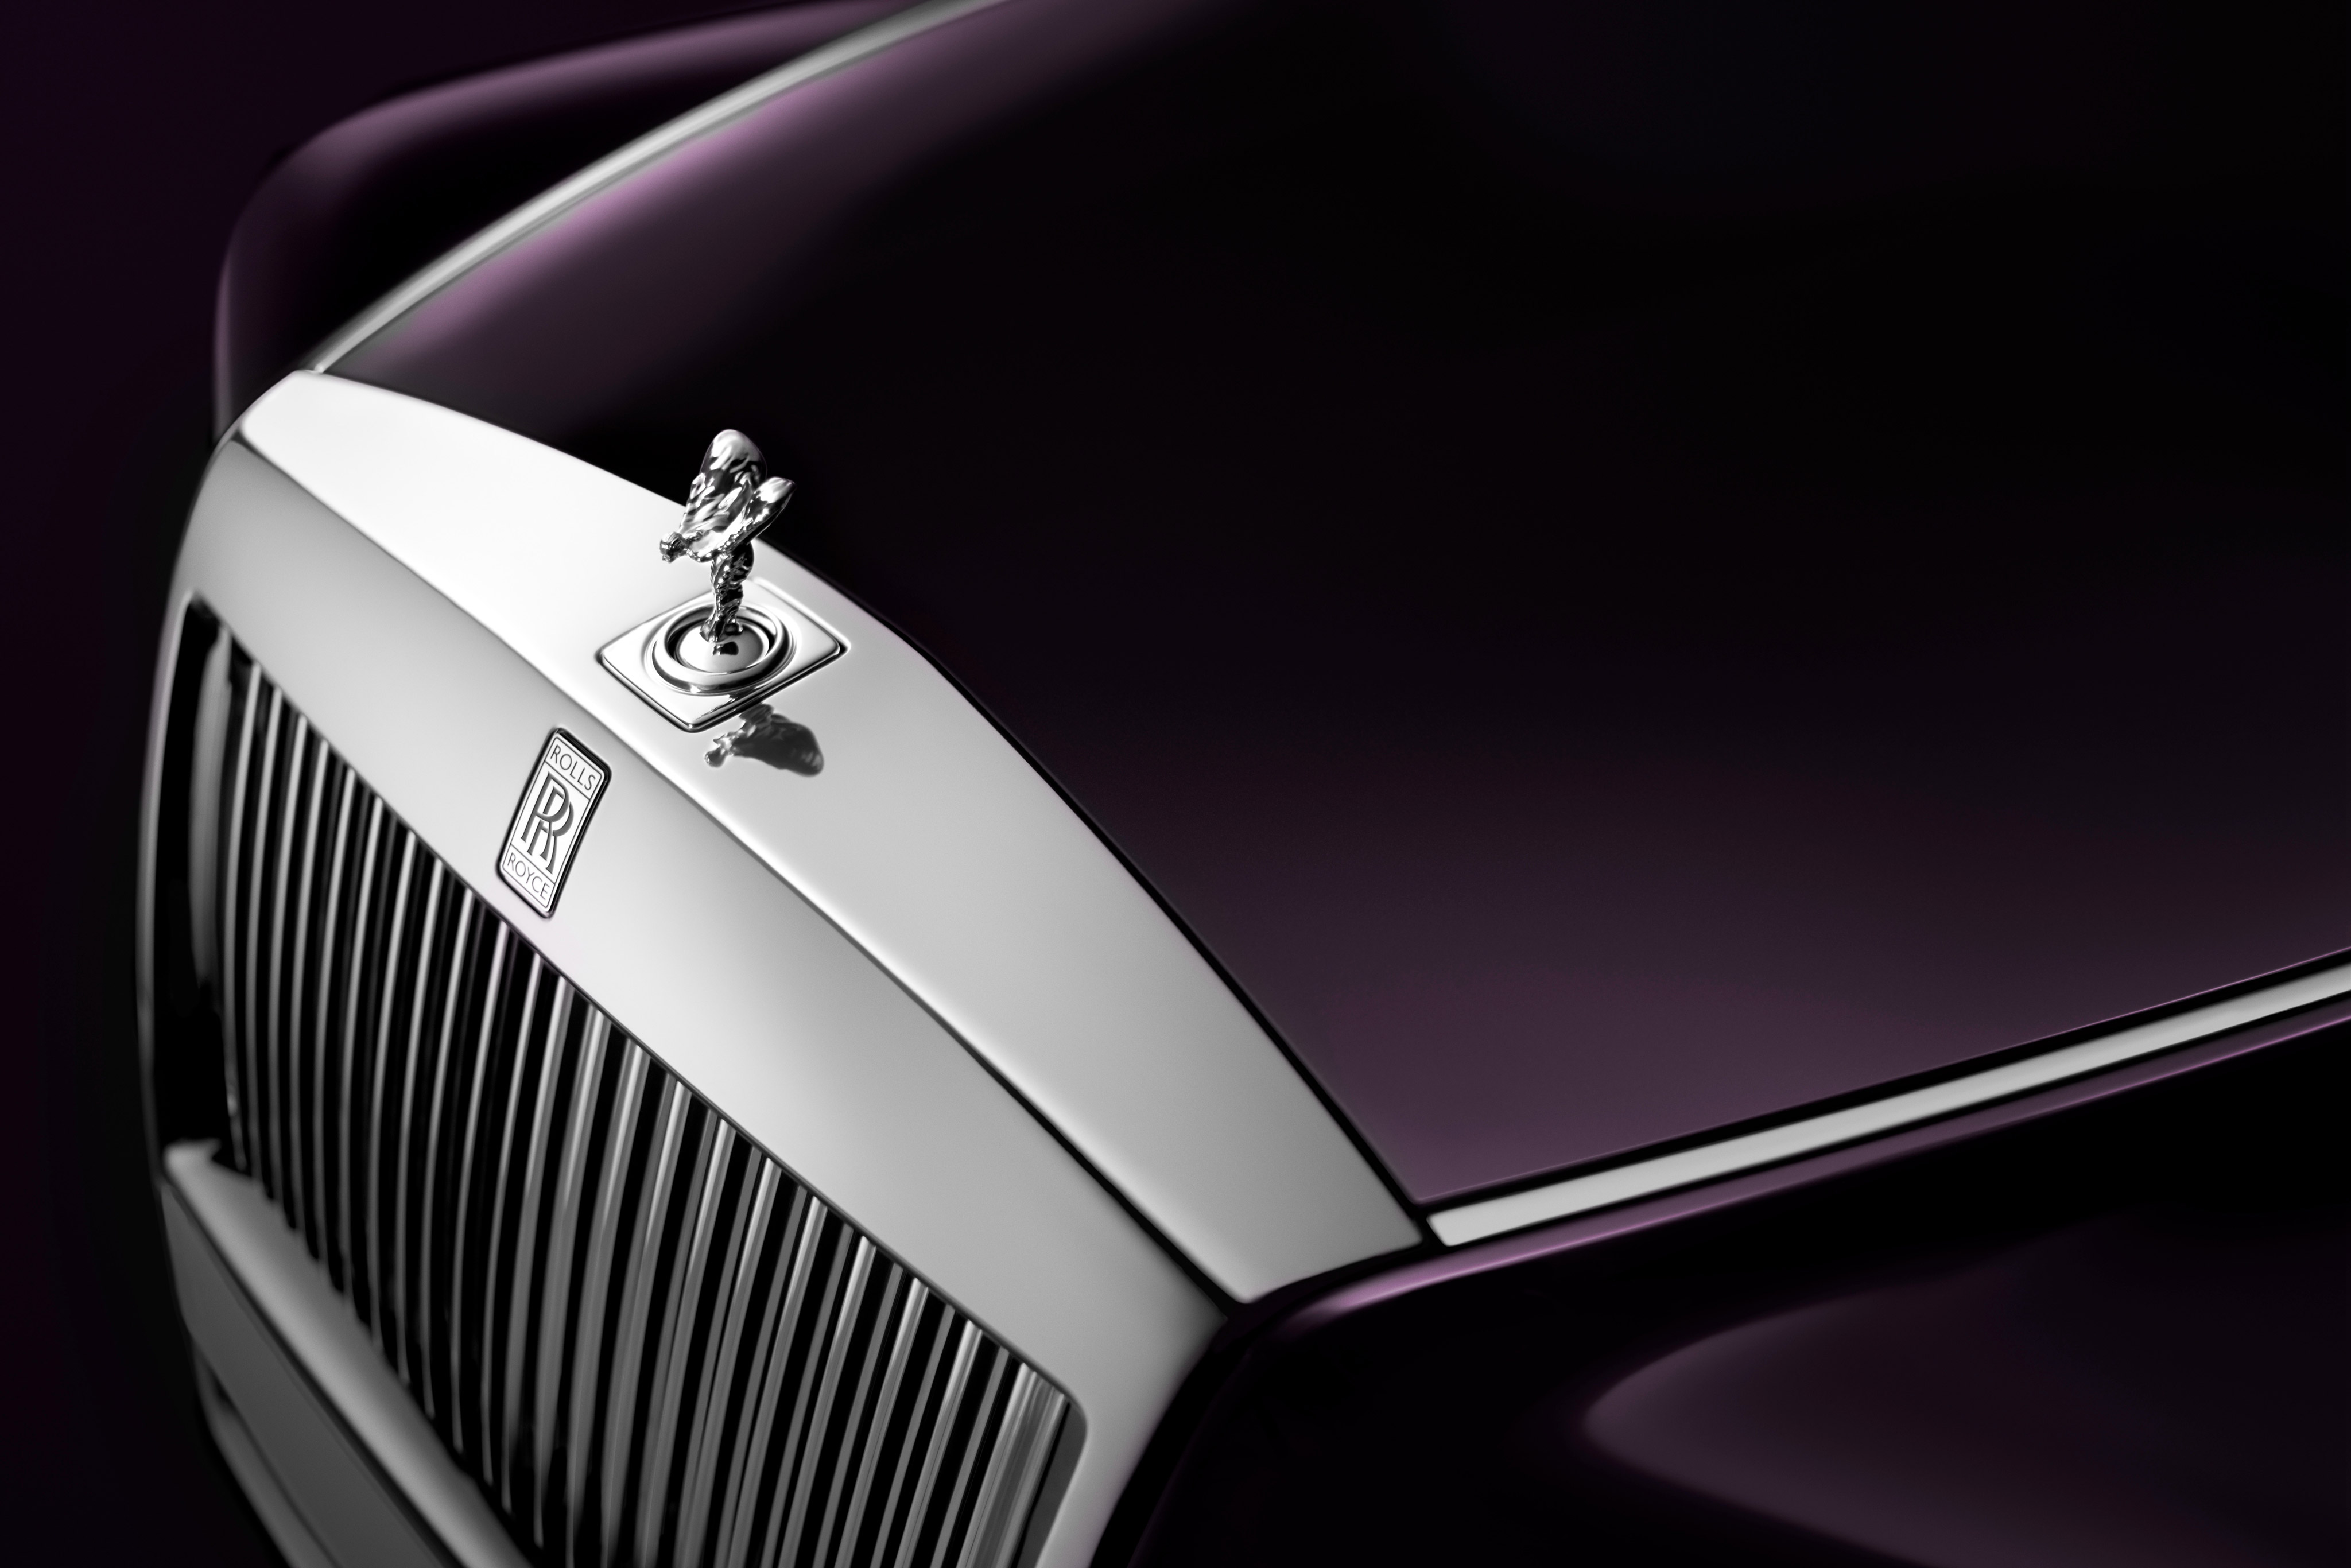 Wallpapers Rolls Royce automobiles 2017 cars on the desktop